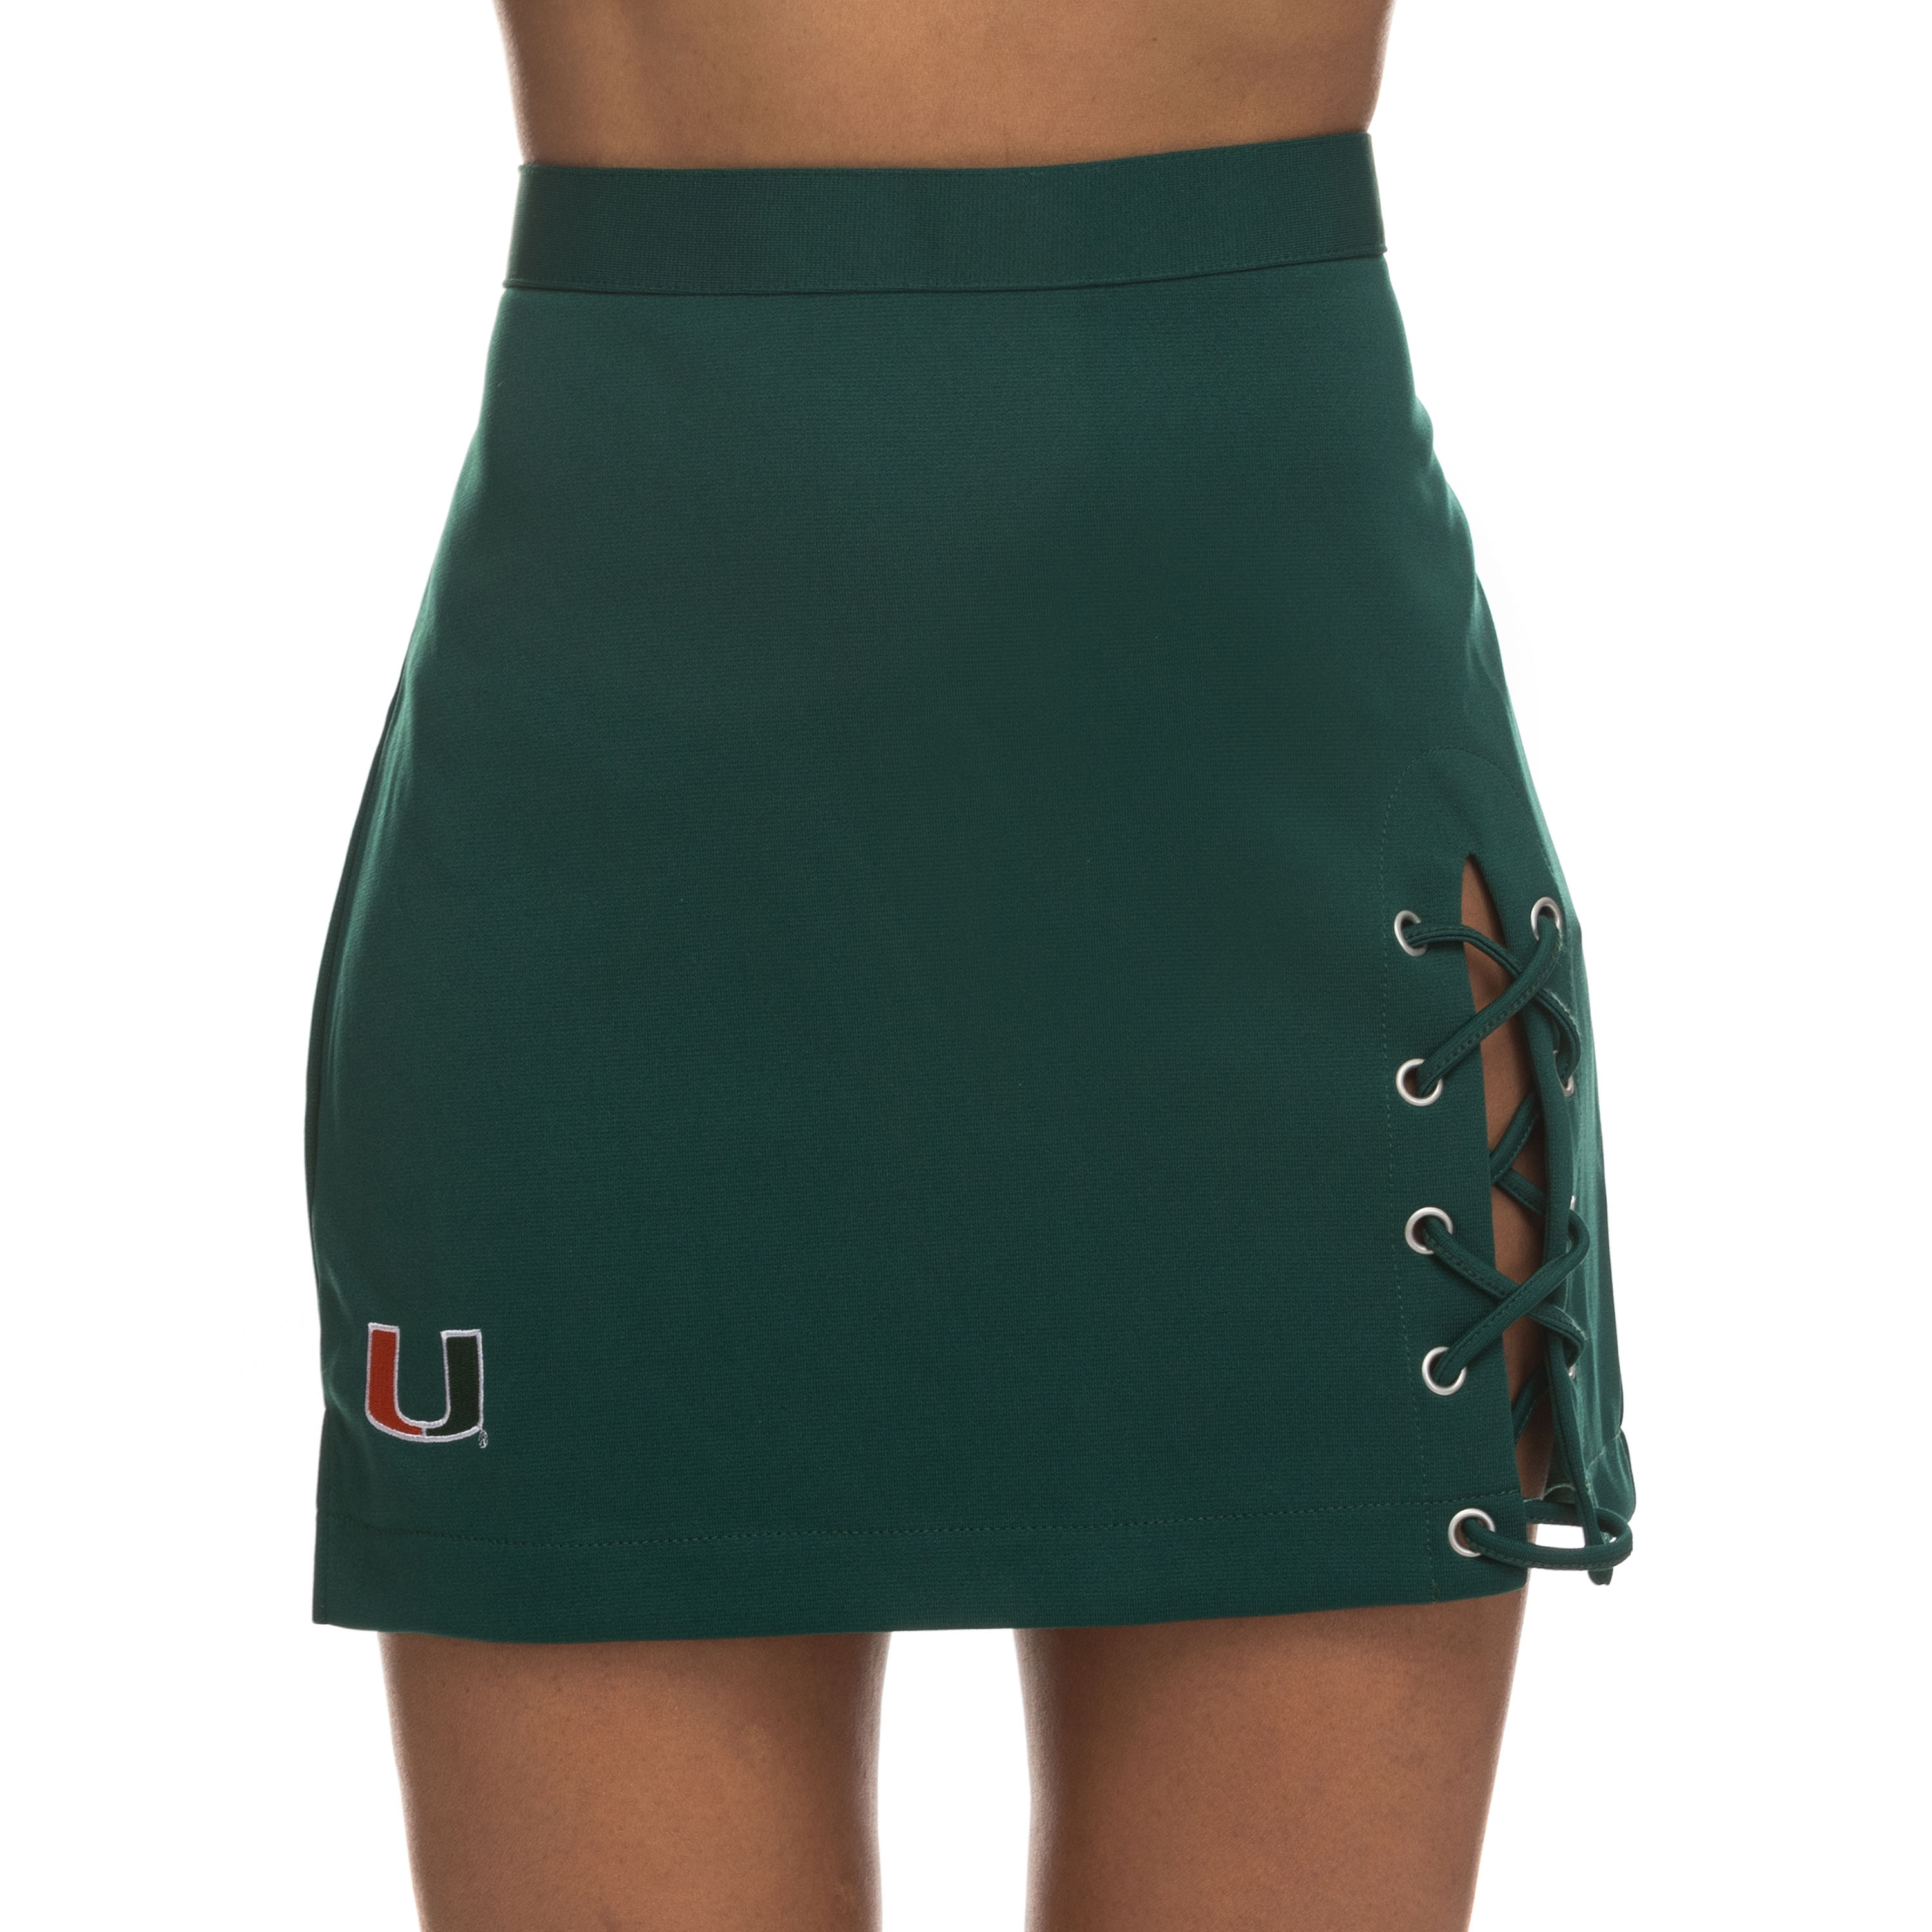 Miami Hurricanes ZooZatz Lace Cheer Skirt - Green